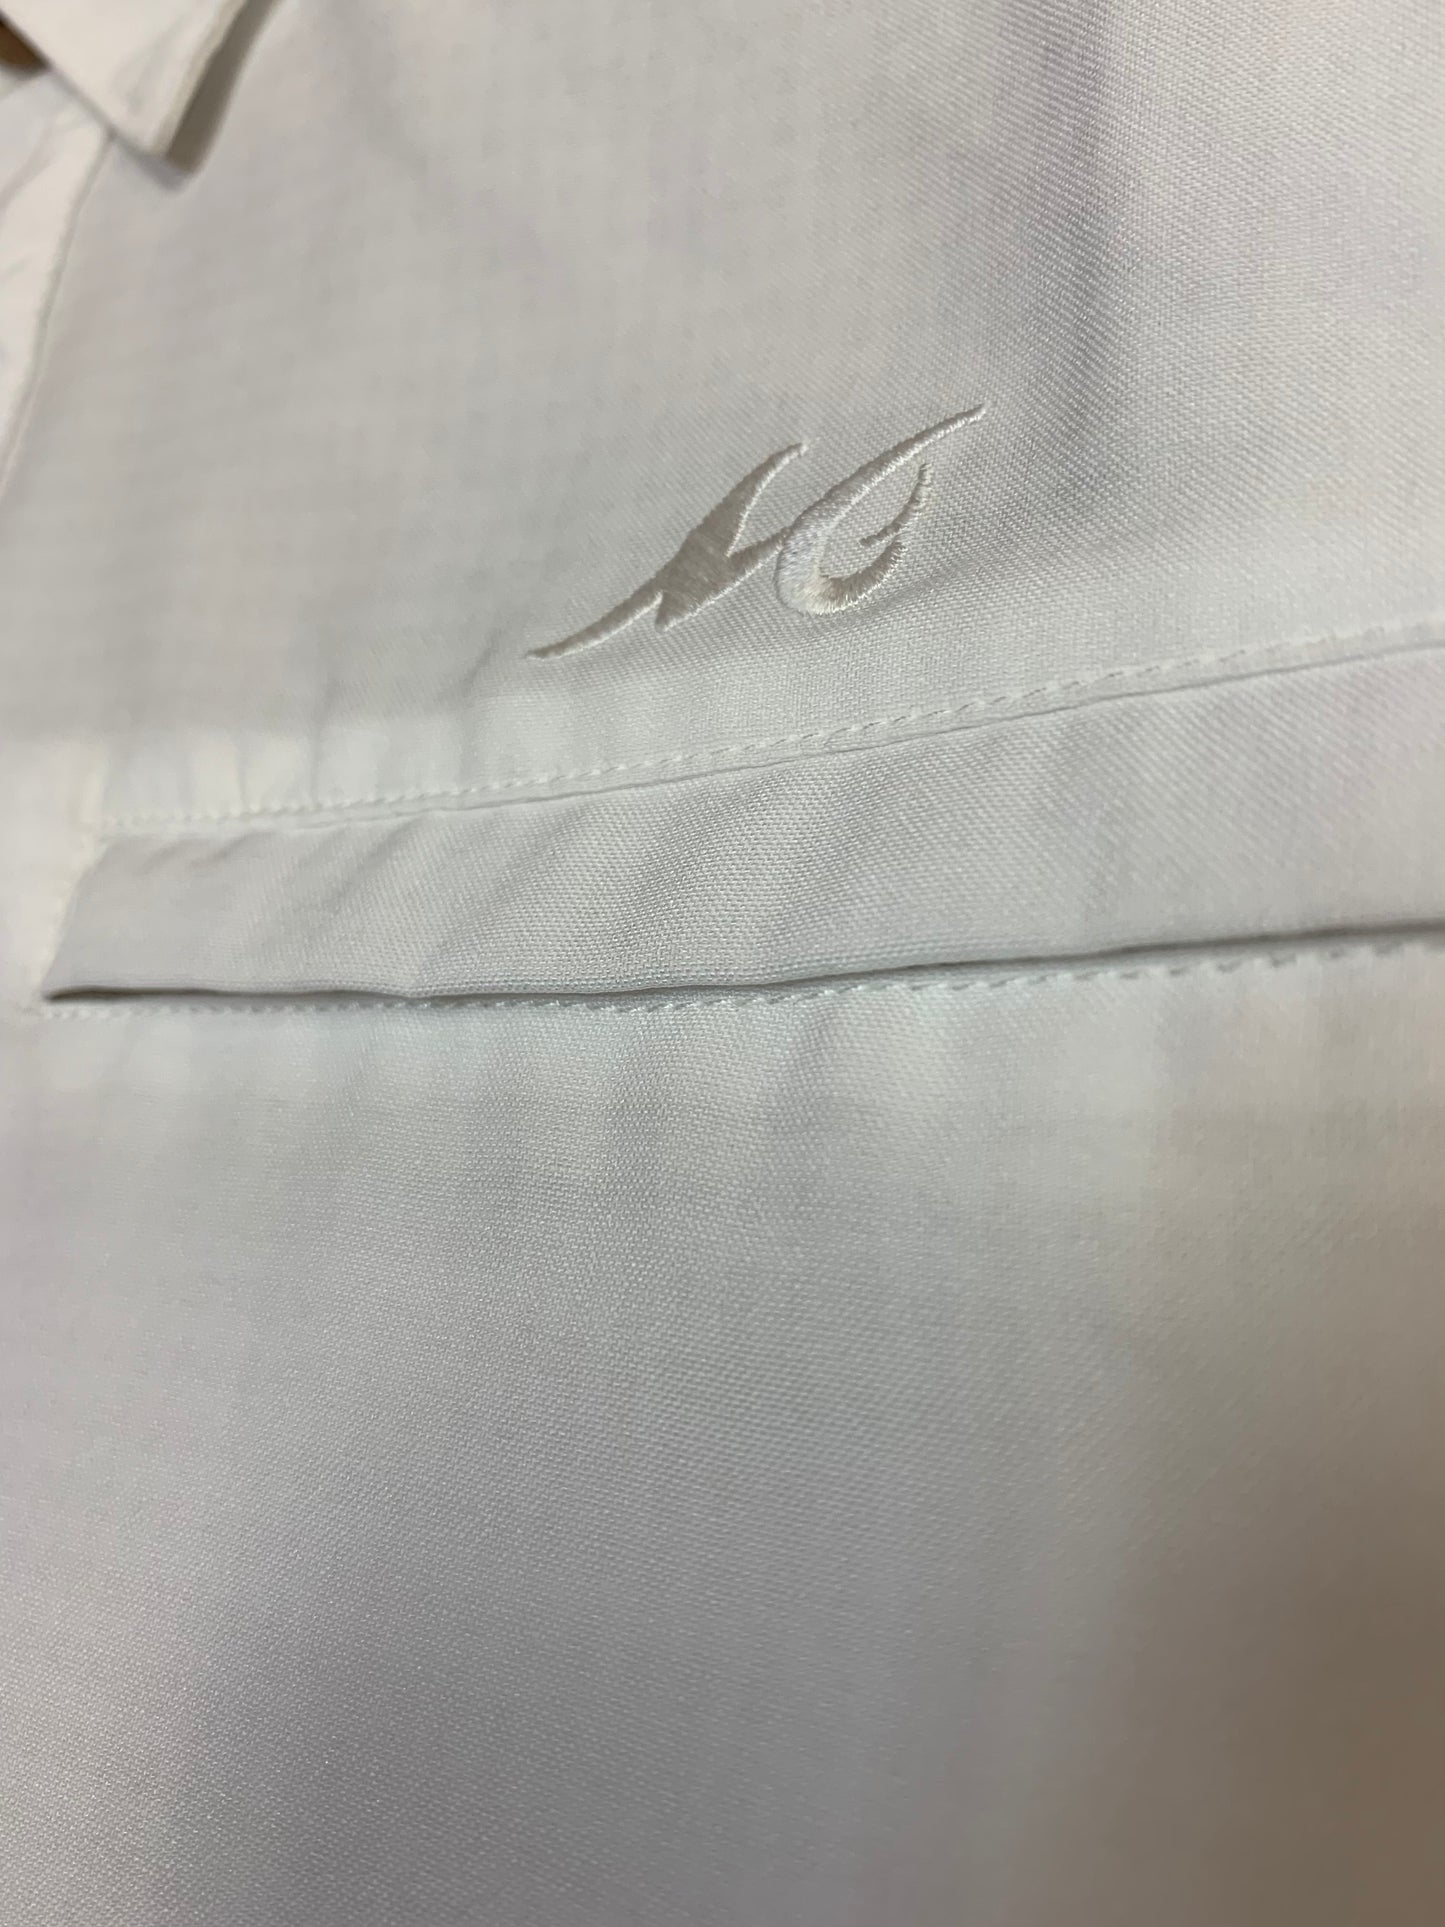 Mr. Big Sport Check Long Sleeve (Closeout Colors) - Mojo Sportswear Company